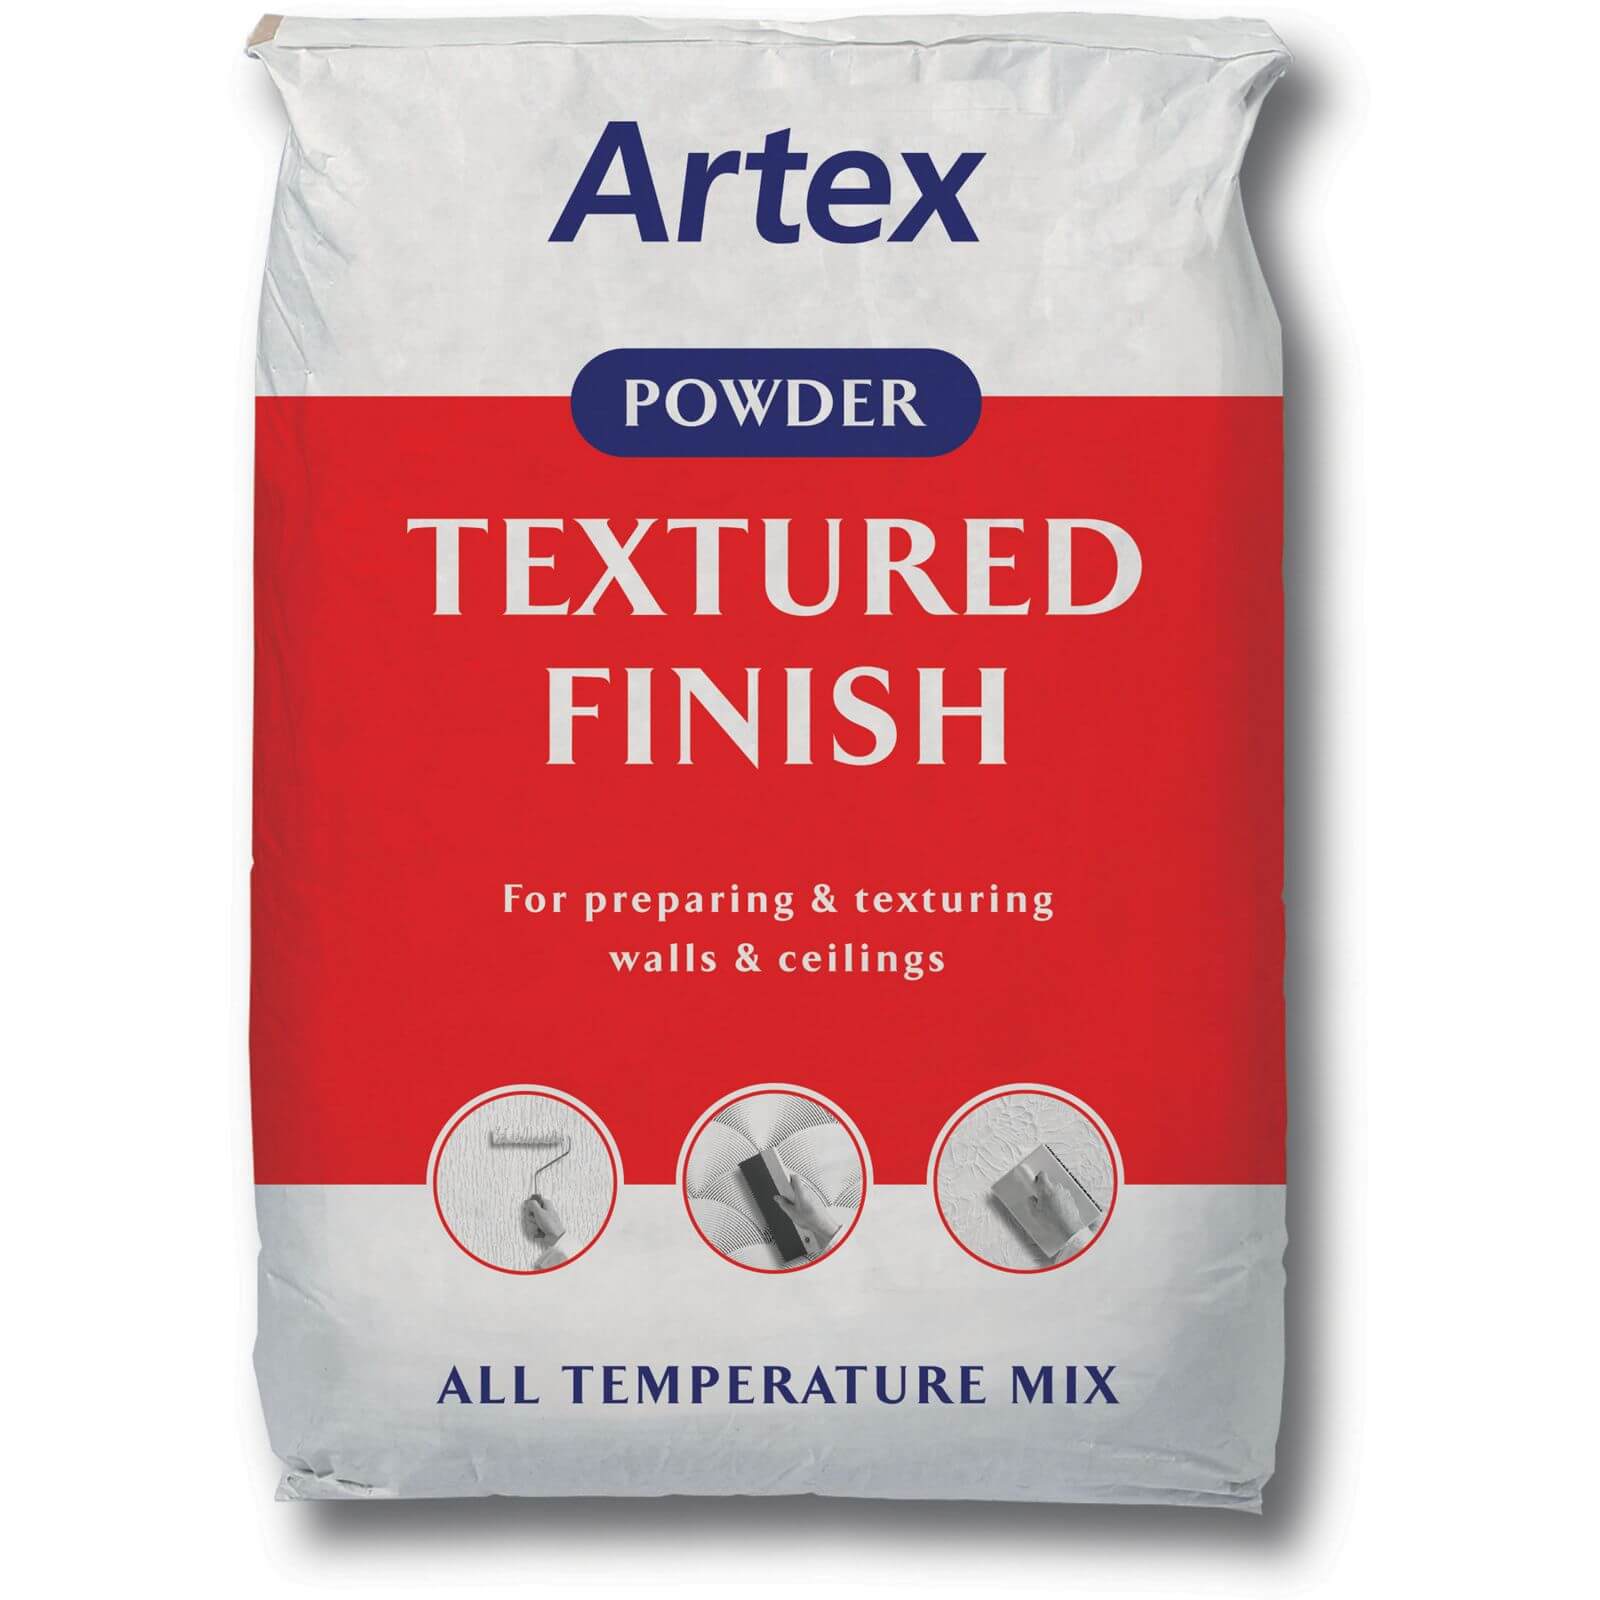 Artex Textured Finish ATM - 5kg